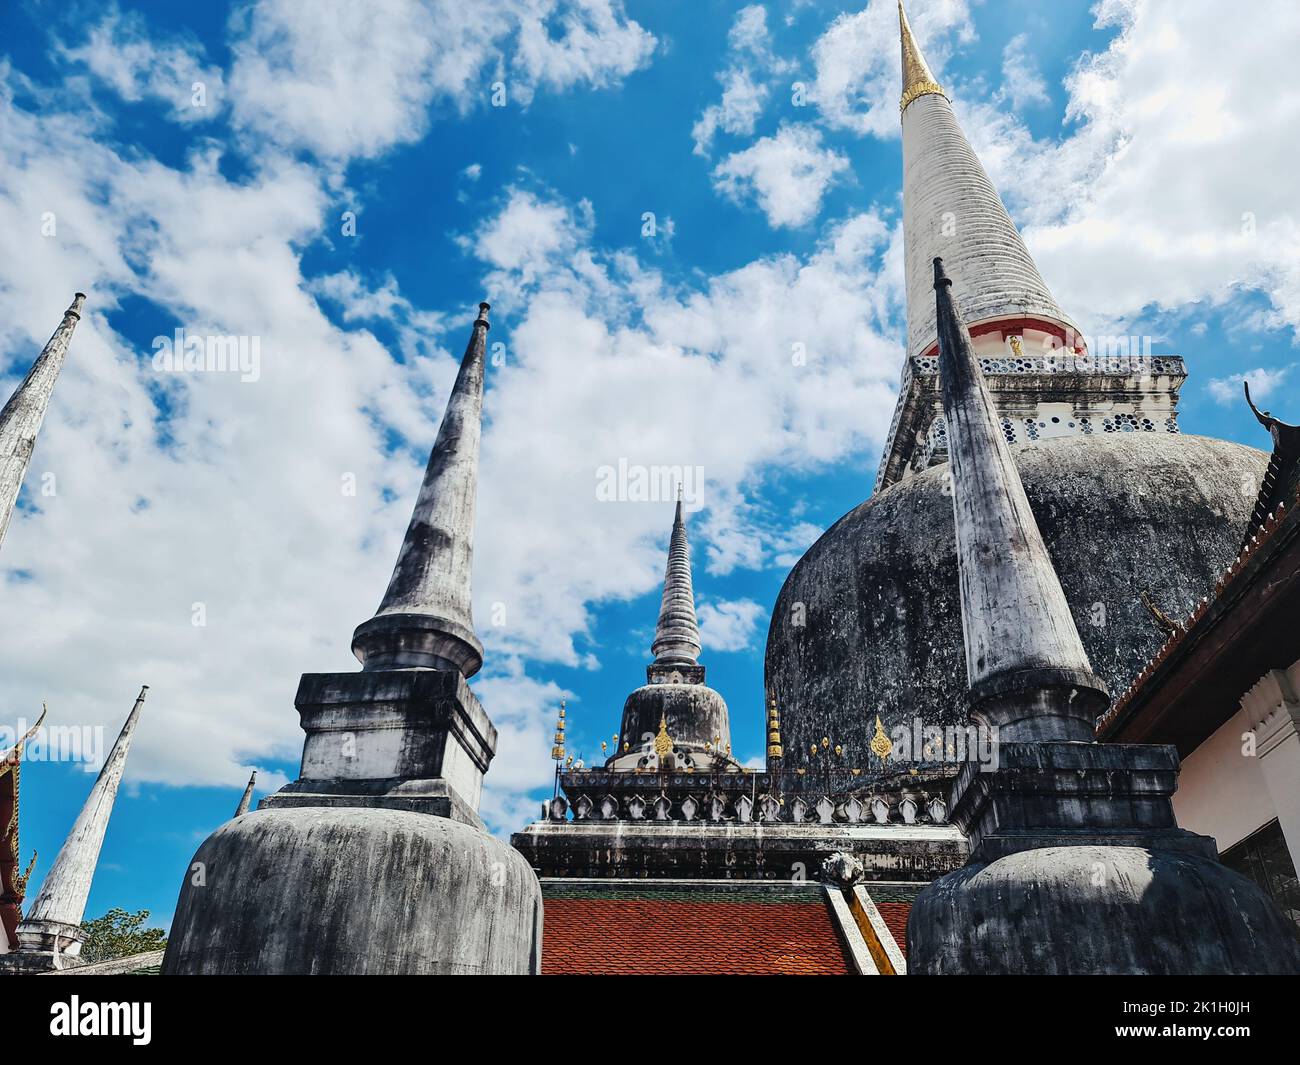 Un tiro a basso angolo del tempio Wat Phra Mahathat Woramahawihan in Thailandia contro un cielo blu nuvoloso Foto Stock